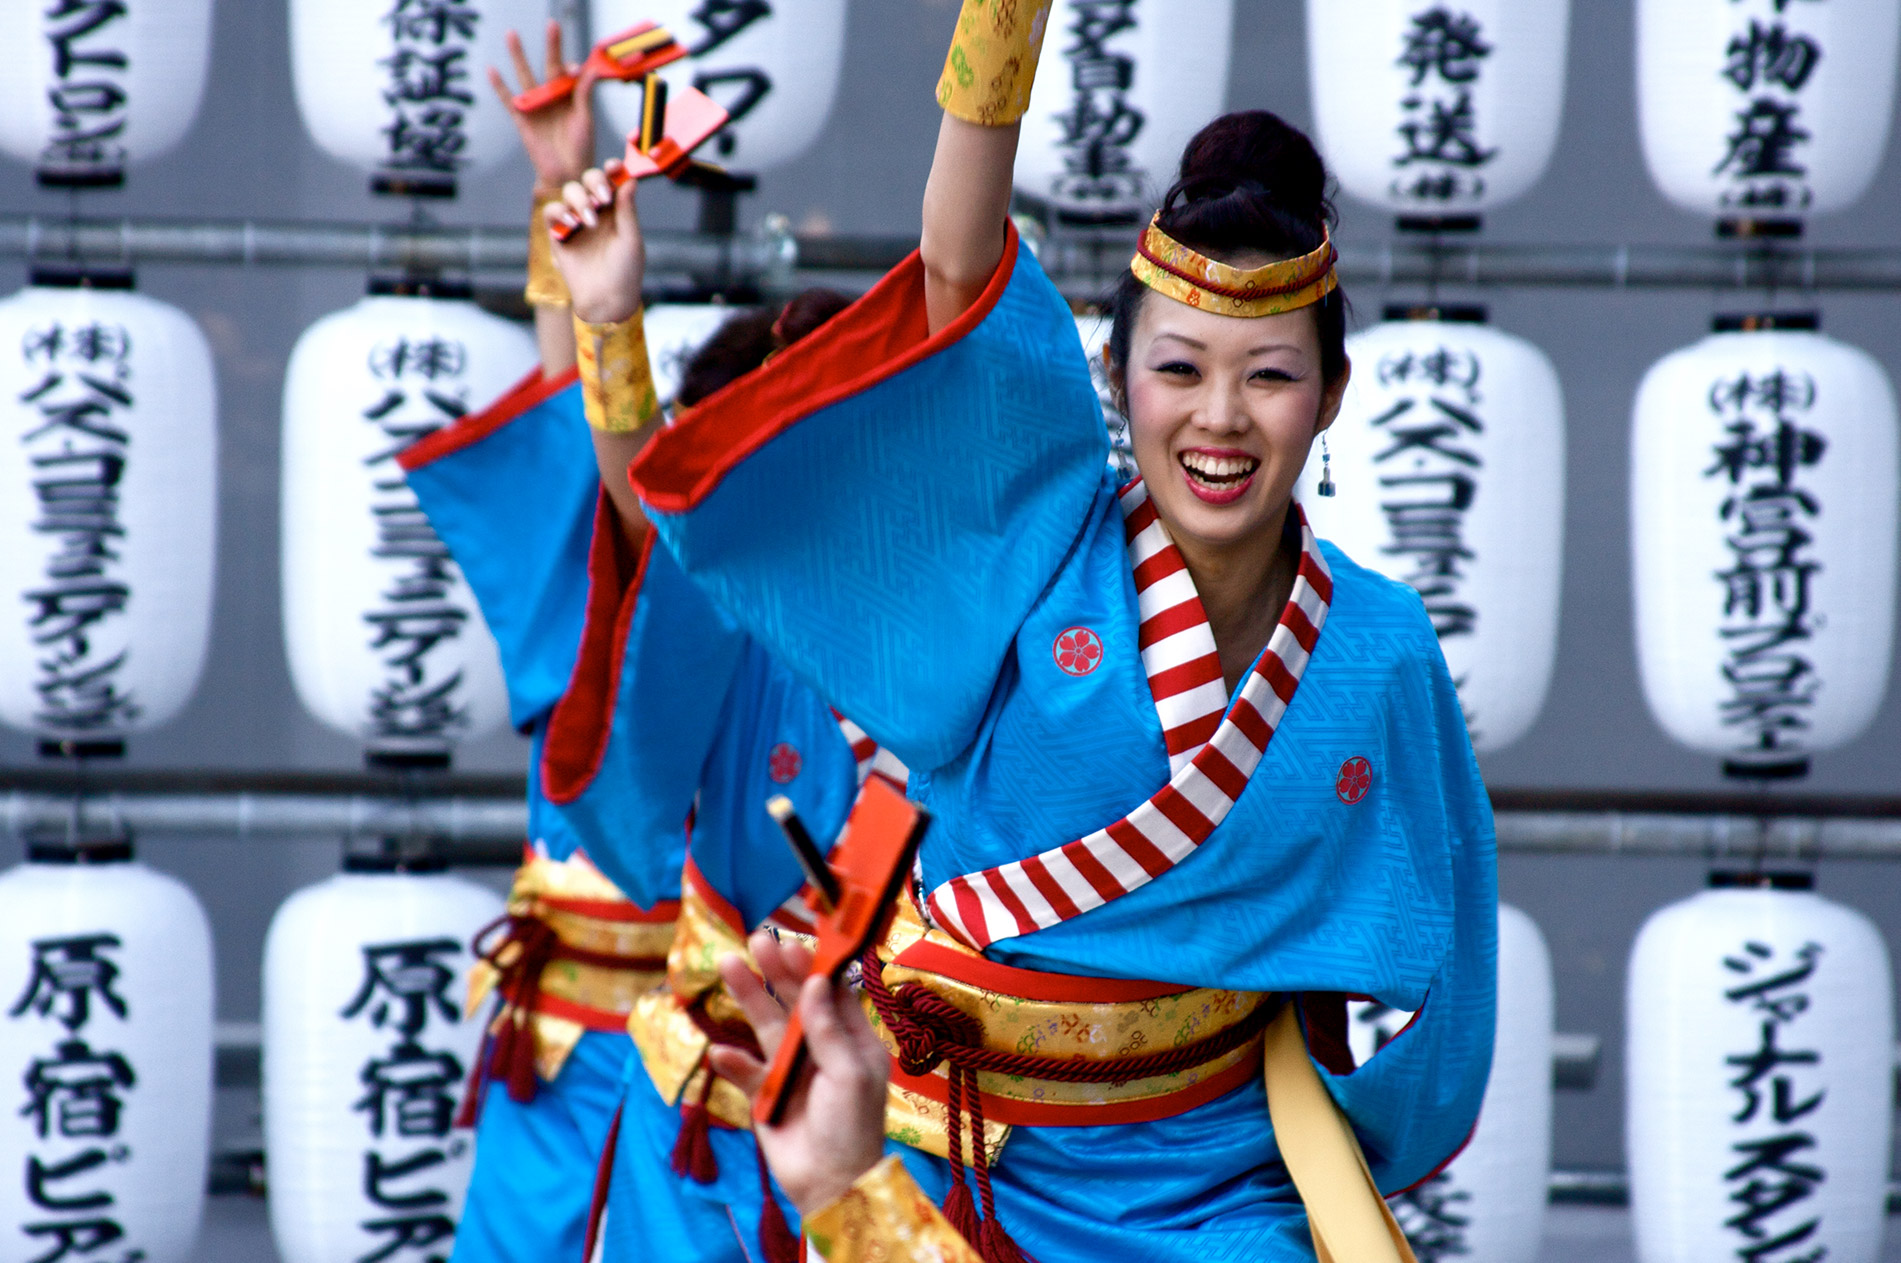 Teilnehmen am Yosakoi-Tanzfestival bedeutet vor allem eins: Spaß. (Foto: Kumar nav auf Flickr https://flic.kr/p/5BJQZH CC BY-SA 2.0 https://creativecommons.org/licenses/by-sa/2.0/)